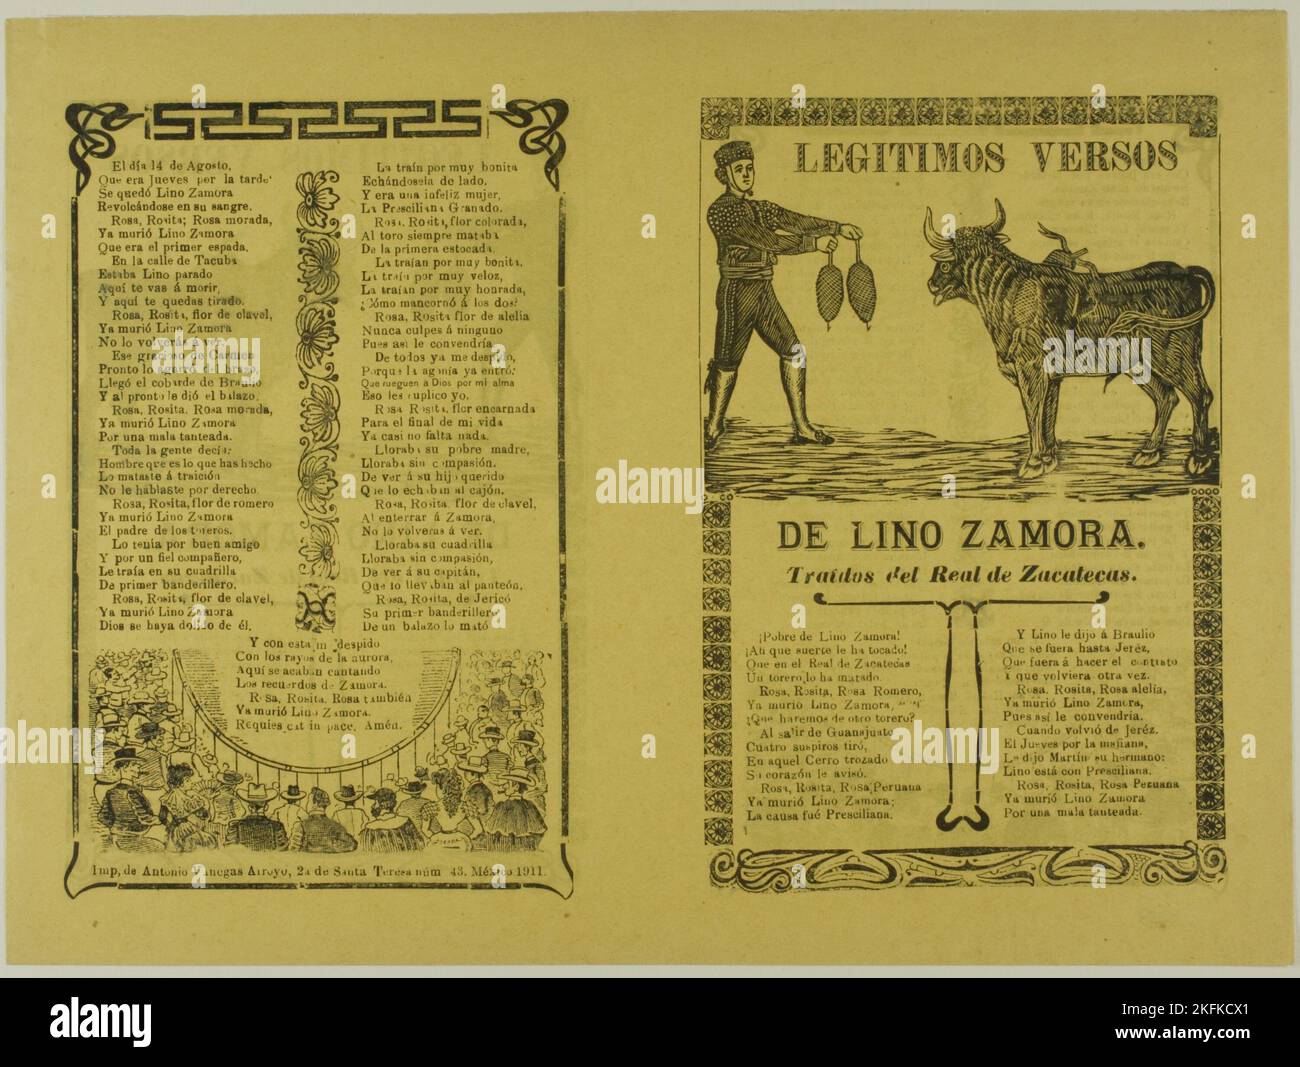 Legitimos versos de Lino Zamora (Legitimate Verses of Lino Zamora), n.d. Stock Photo